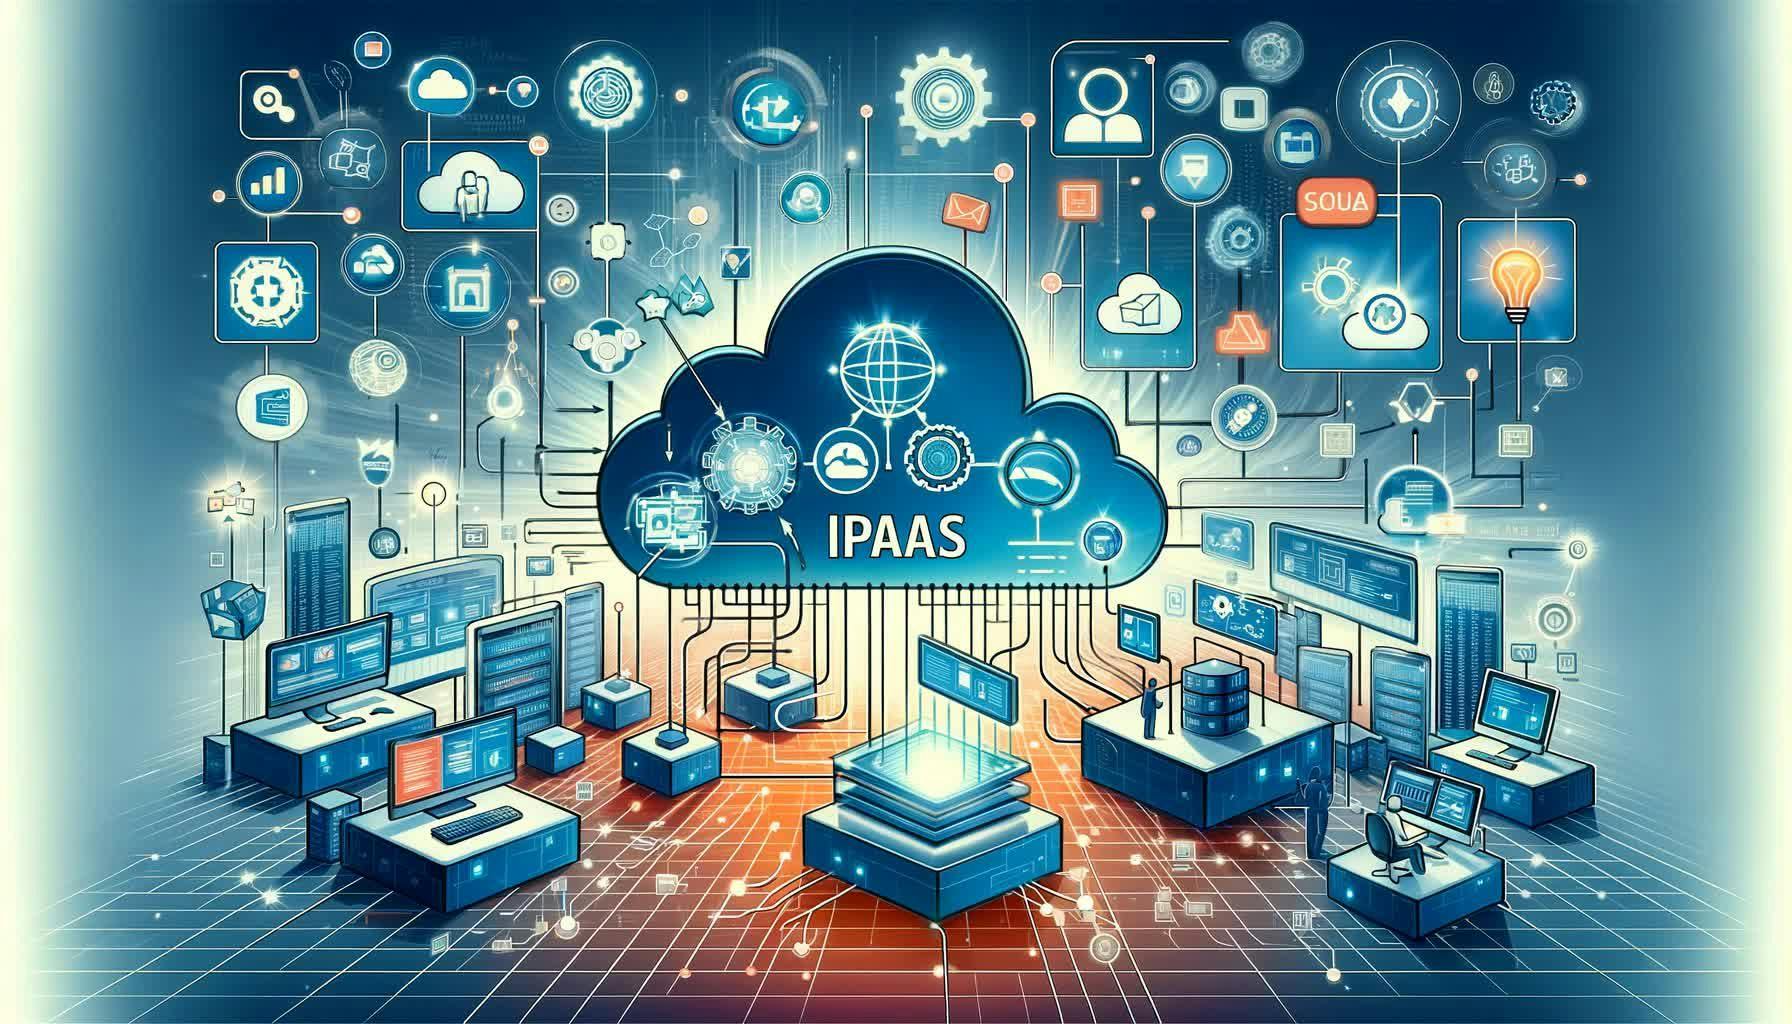 iPaaS (Integration Platform as a Service) 